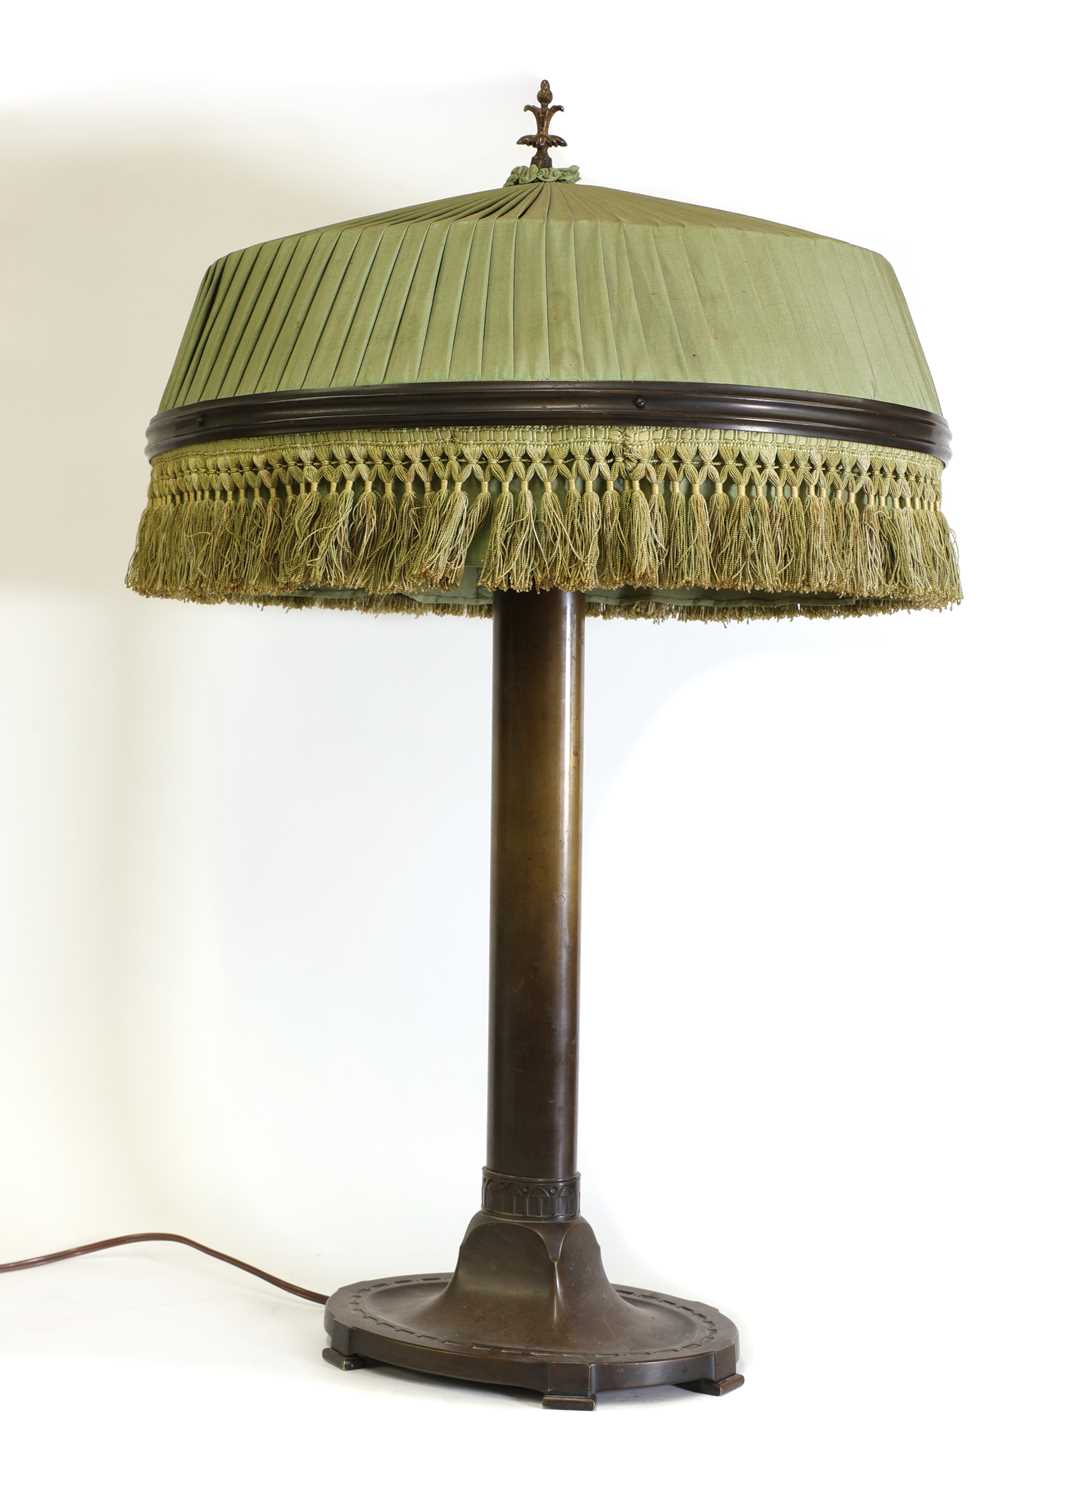 A patinated bronze Art Nouveau table lamp, - Image 2 of 3